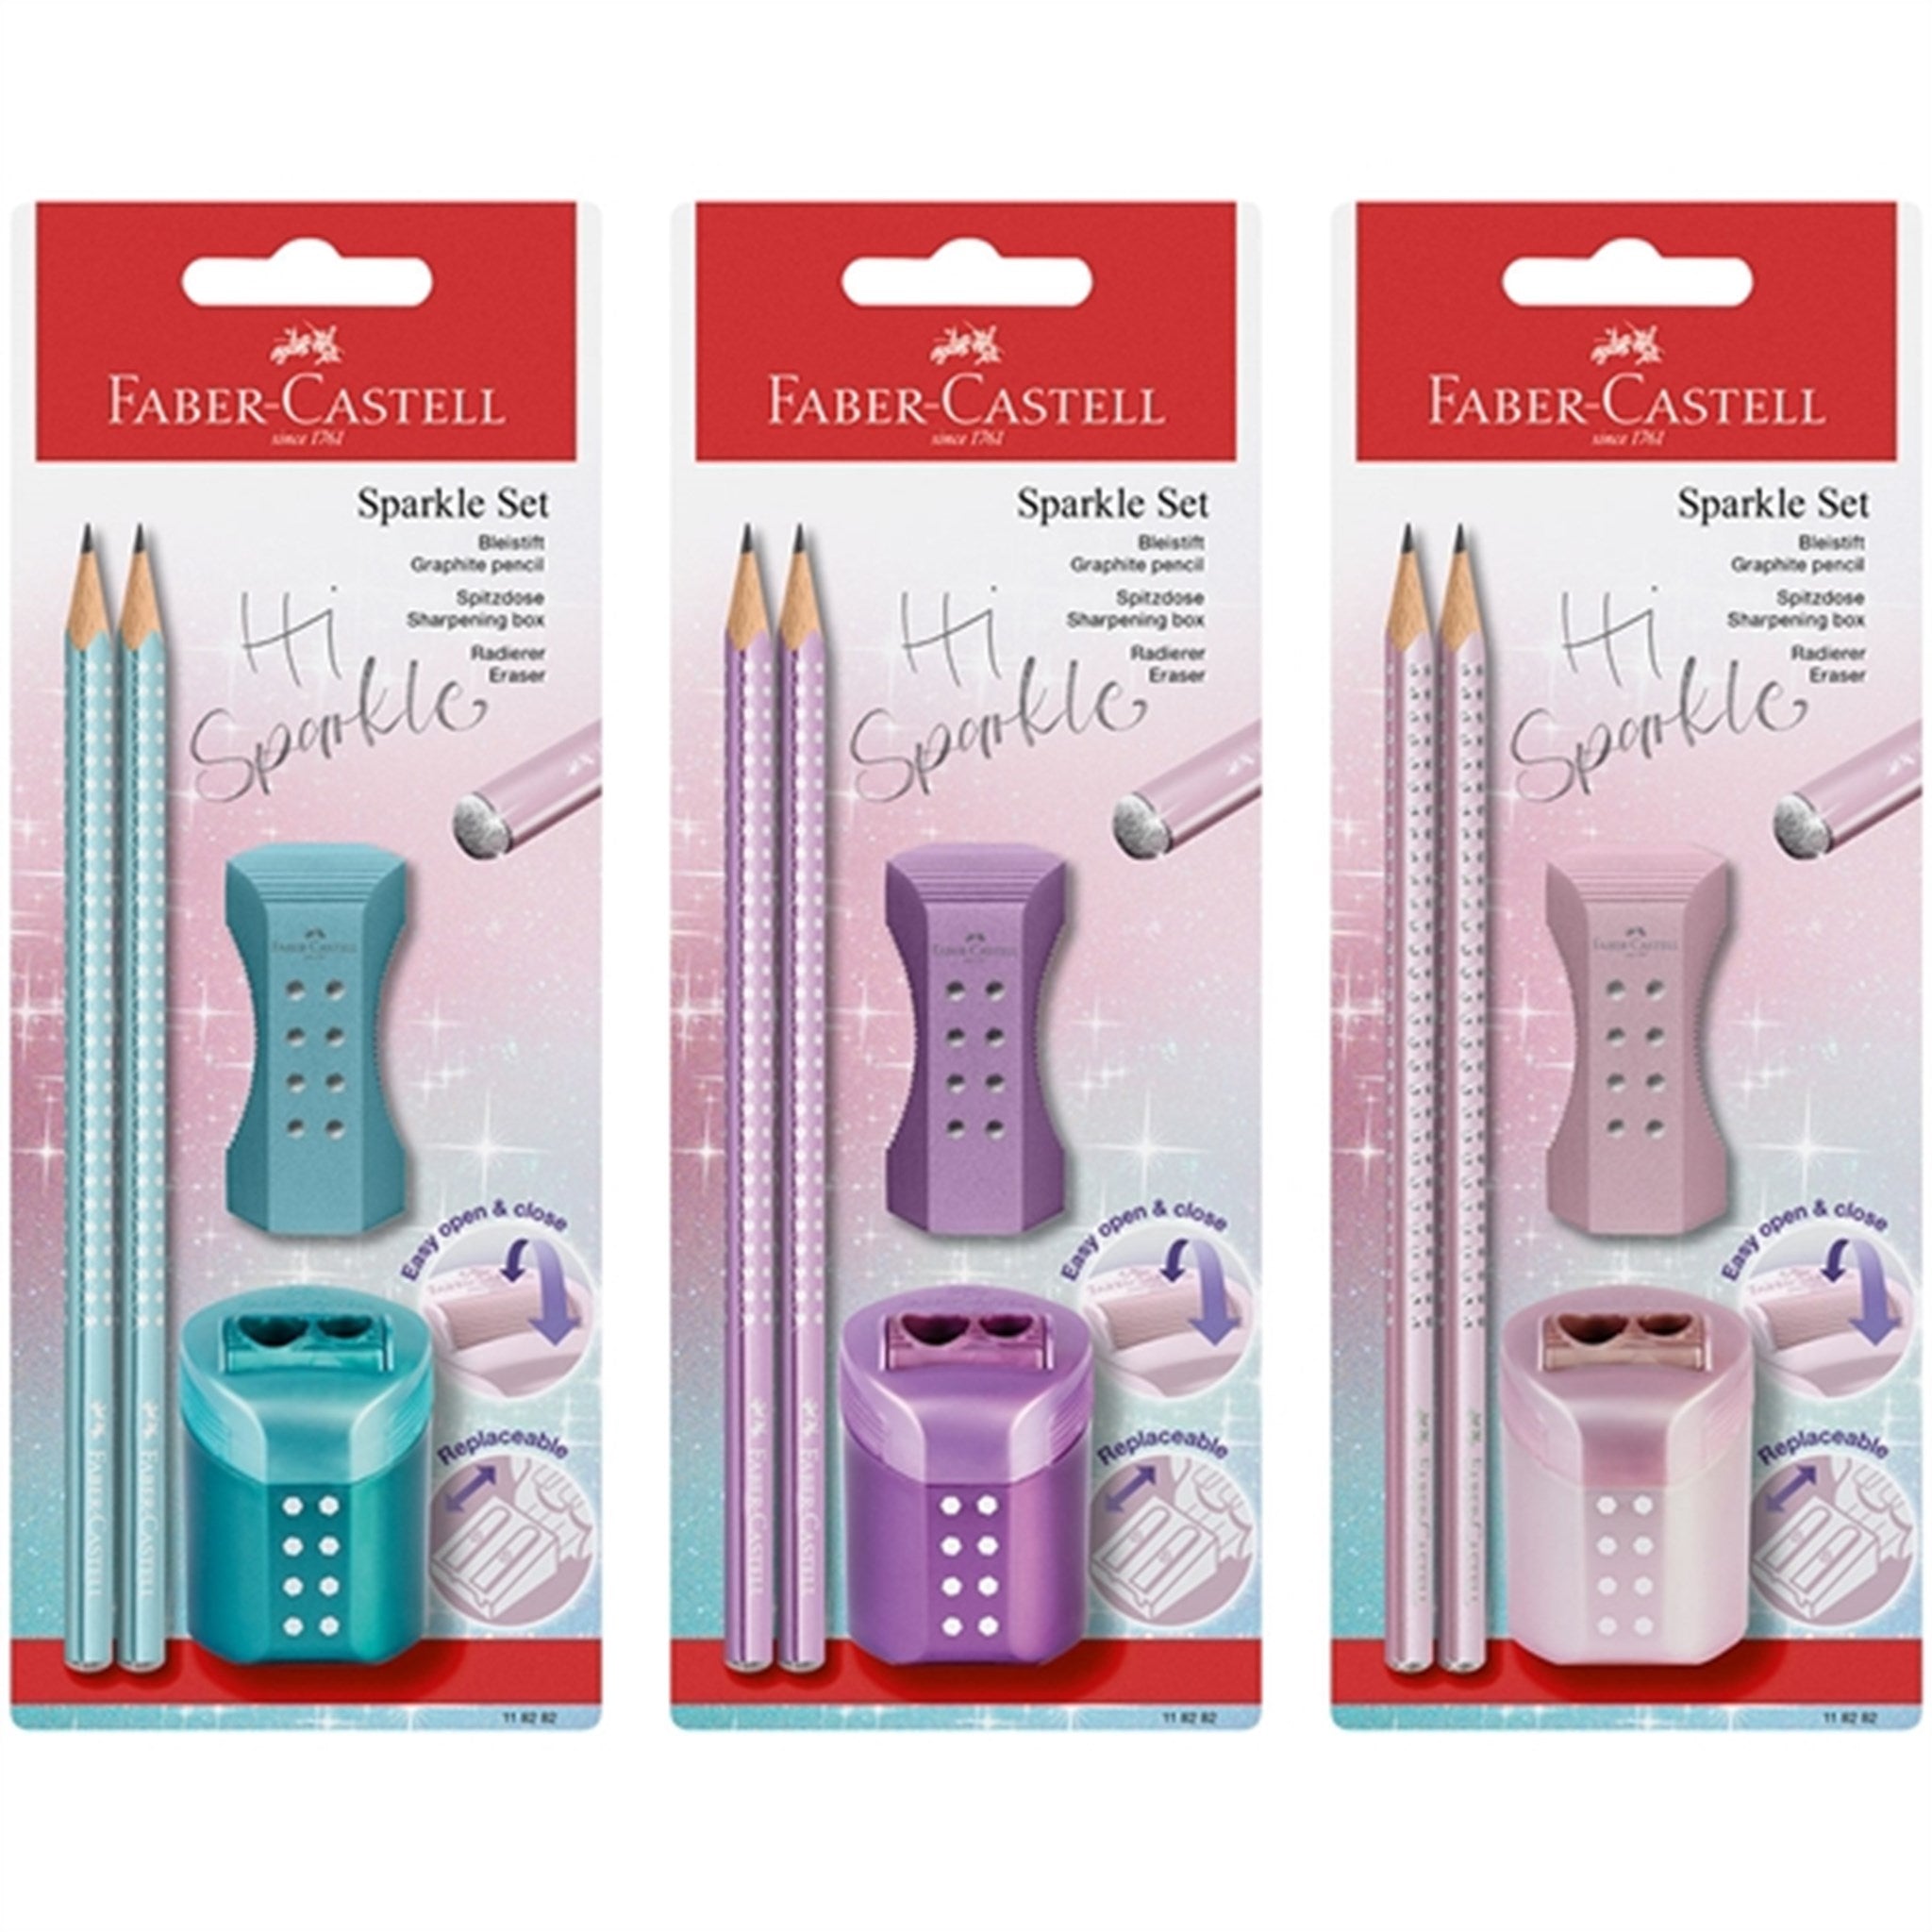 Faber-Castell Sparkle Pencil, Eraser, Pencil Sharpener - Turquoise 2